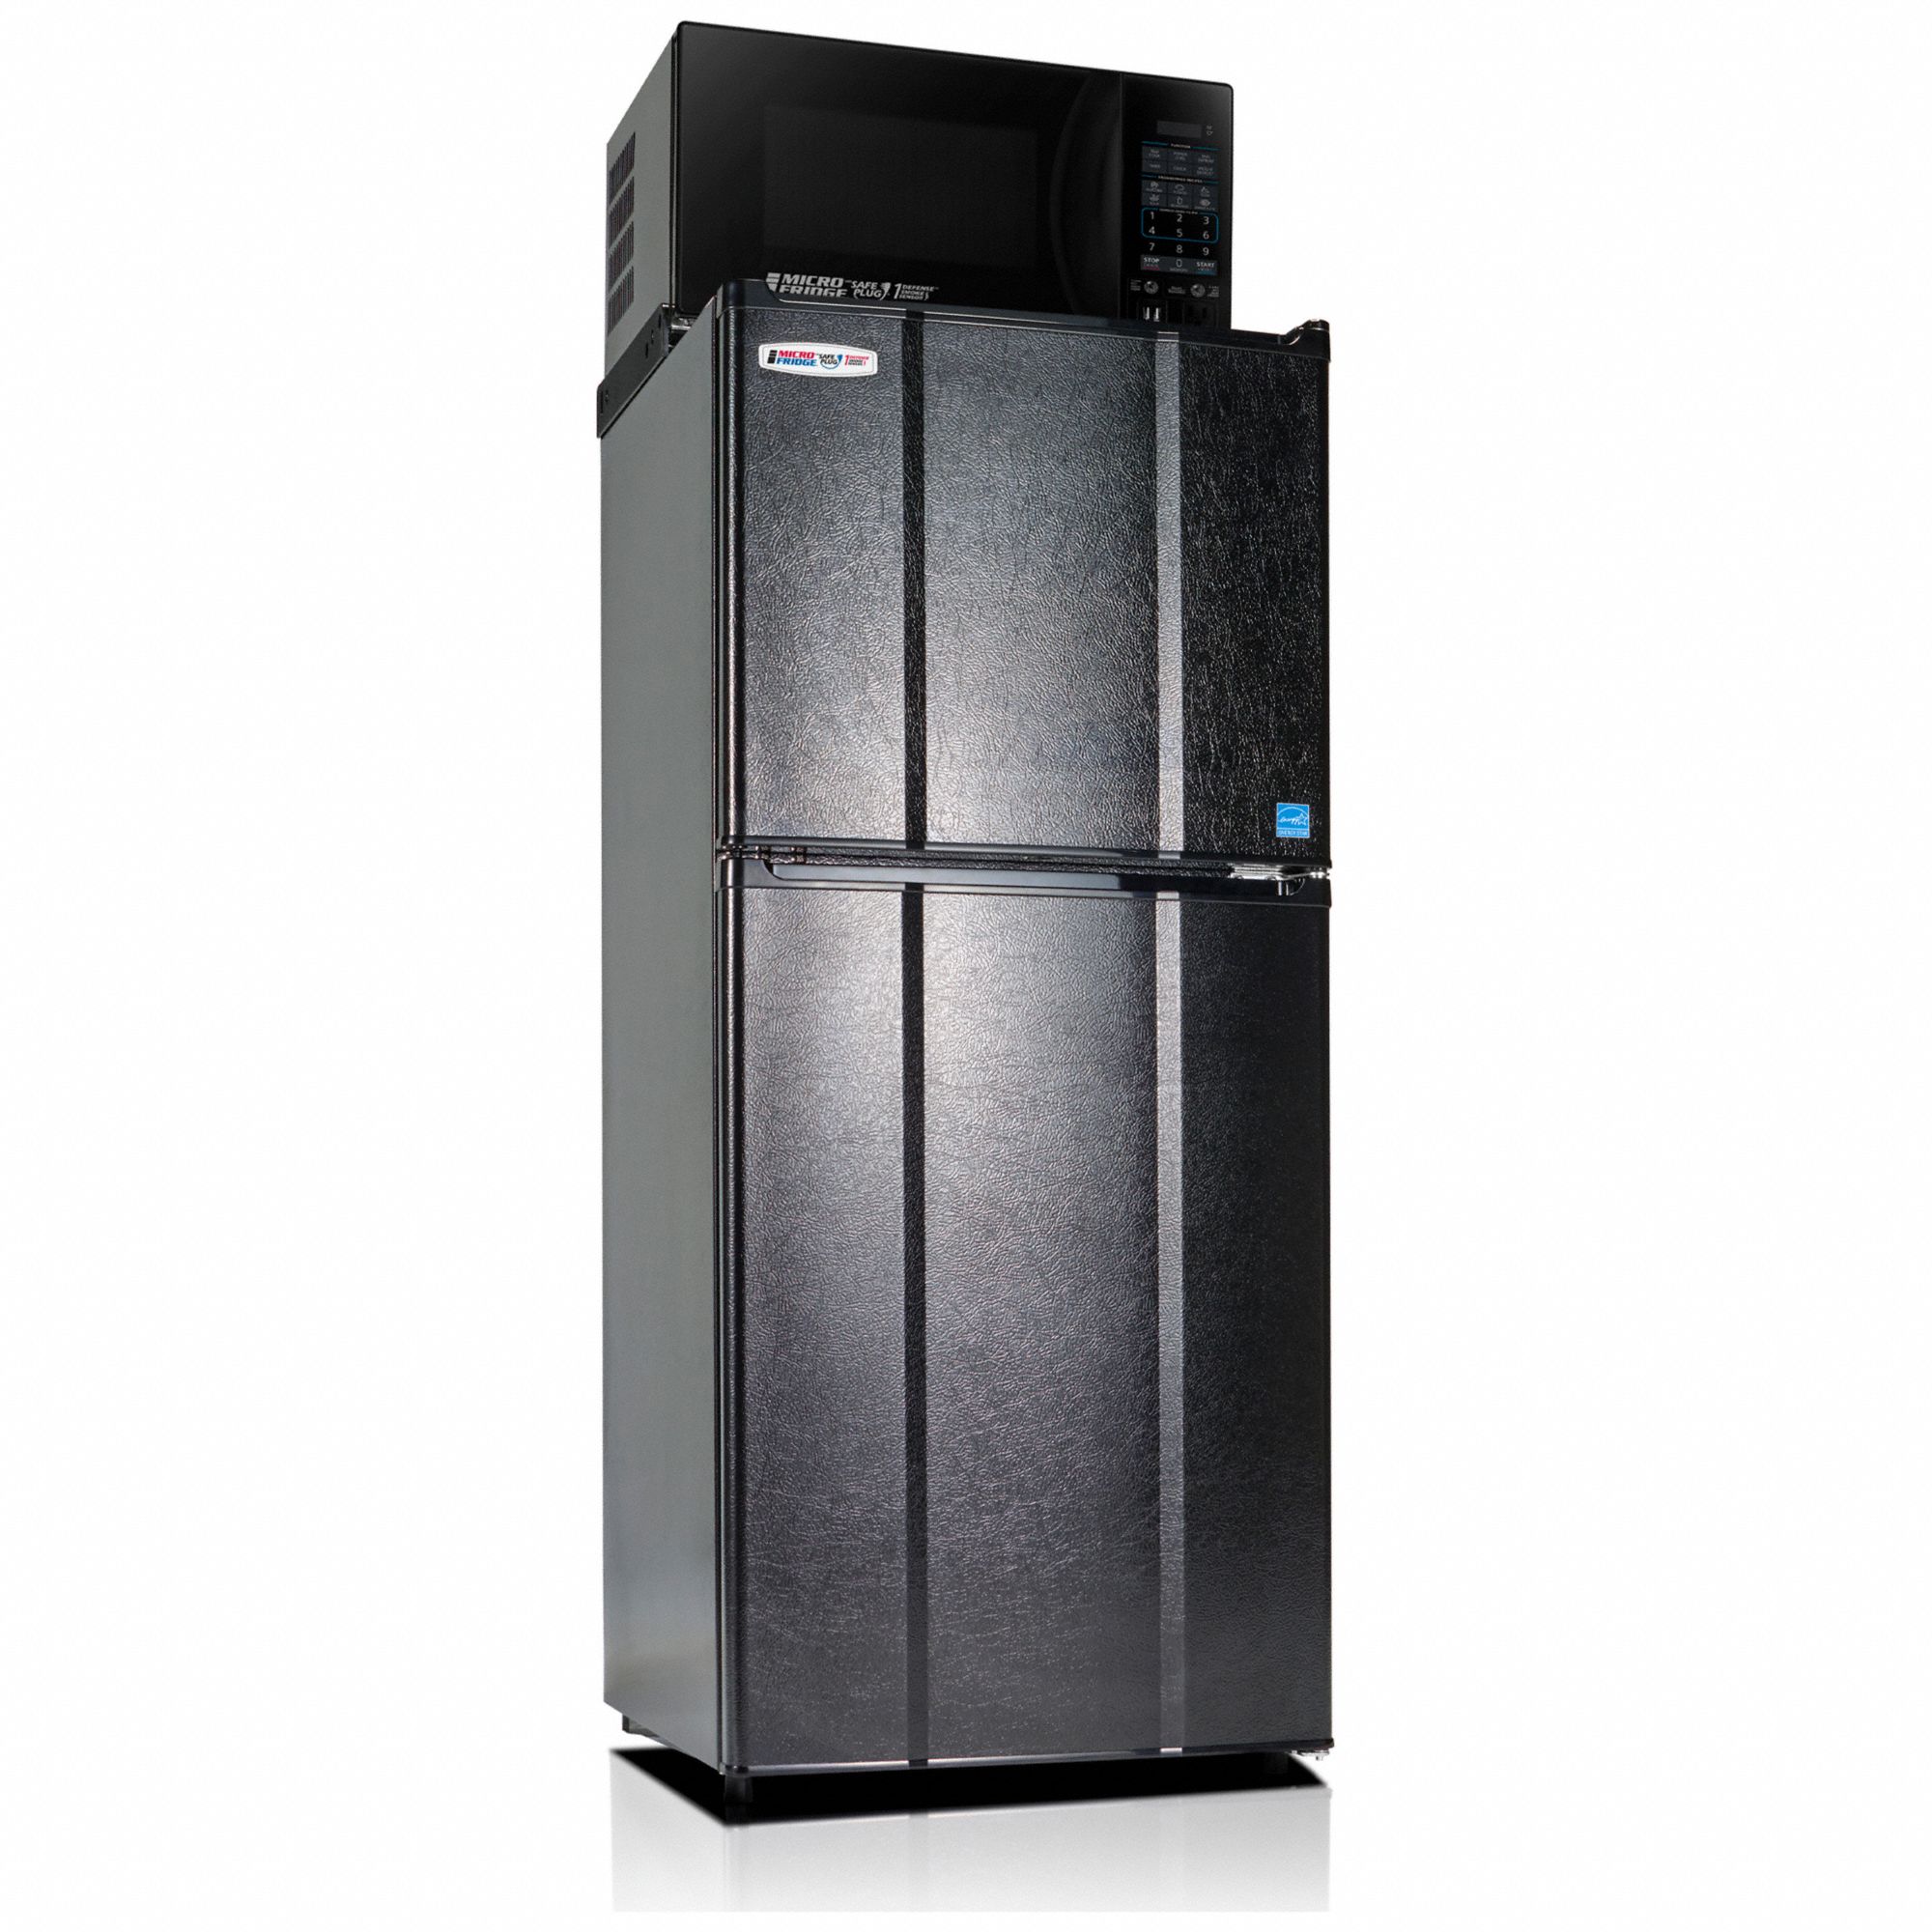 Refrigerator, Freezer and Microwave: 4.8 cu ft Total Capacity, Black